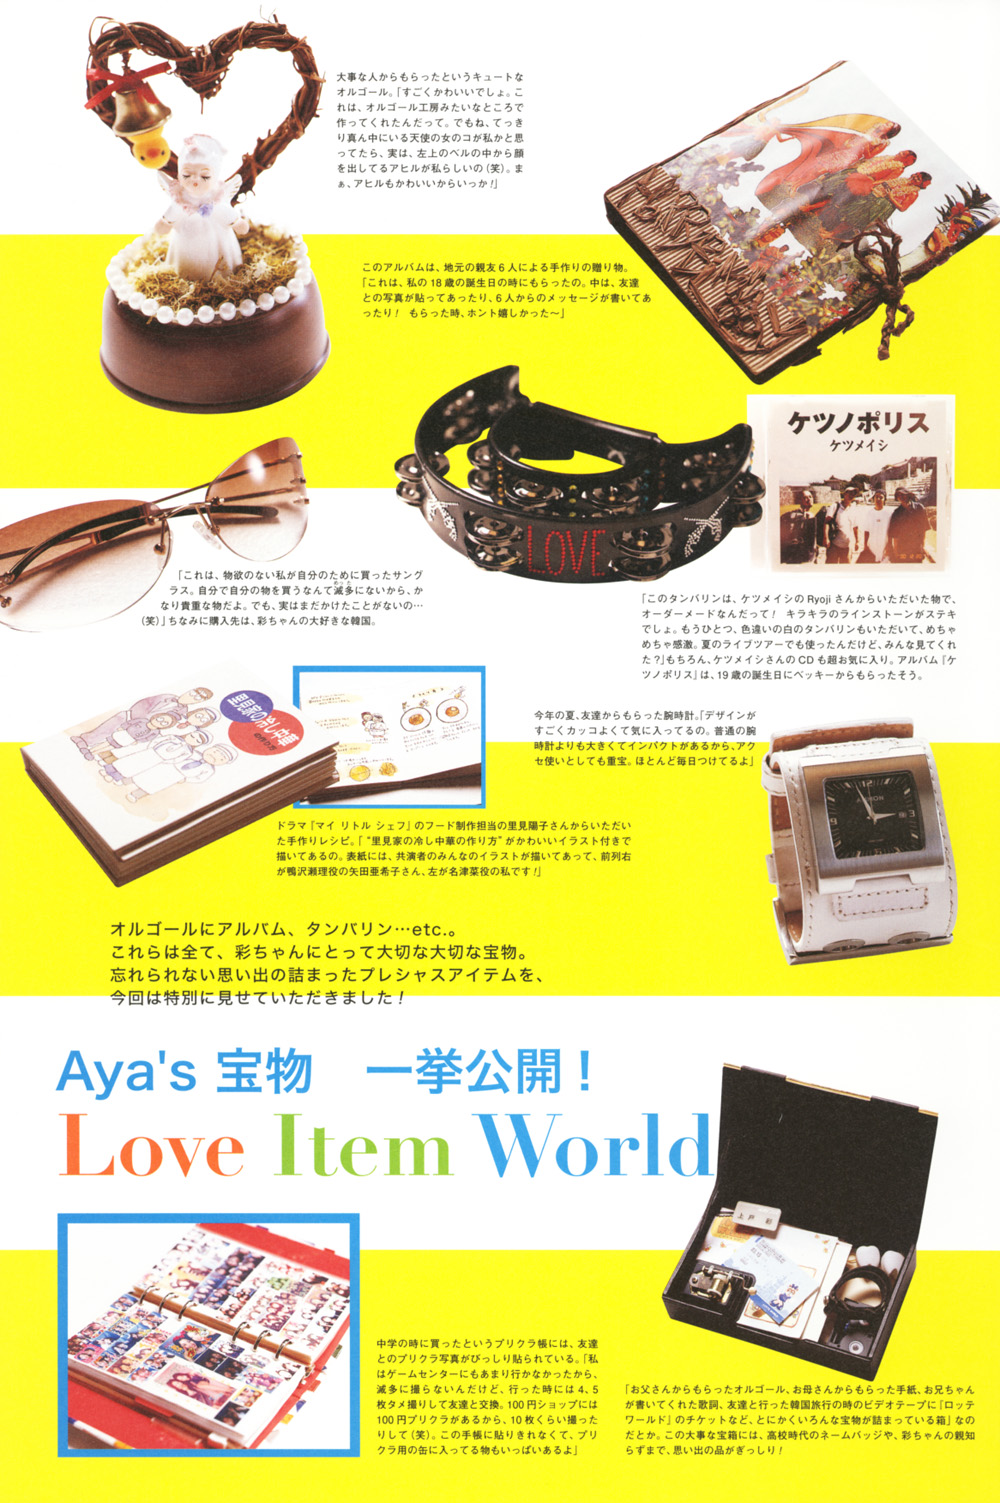 ueto, photobook, Japan, Stars, Aya, 5th, Breath, 